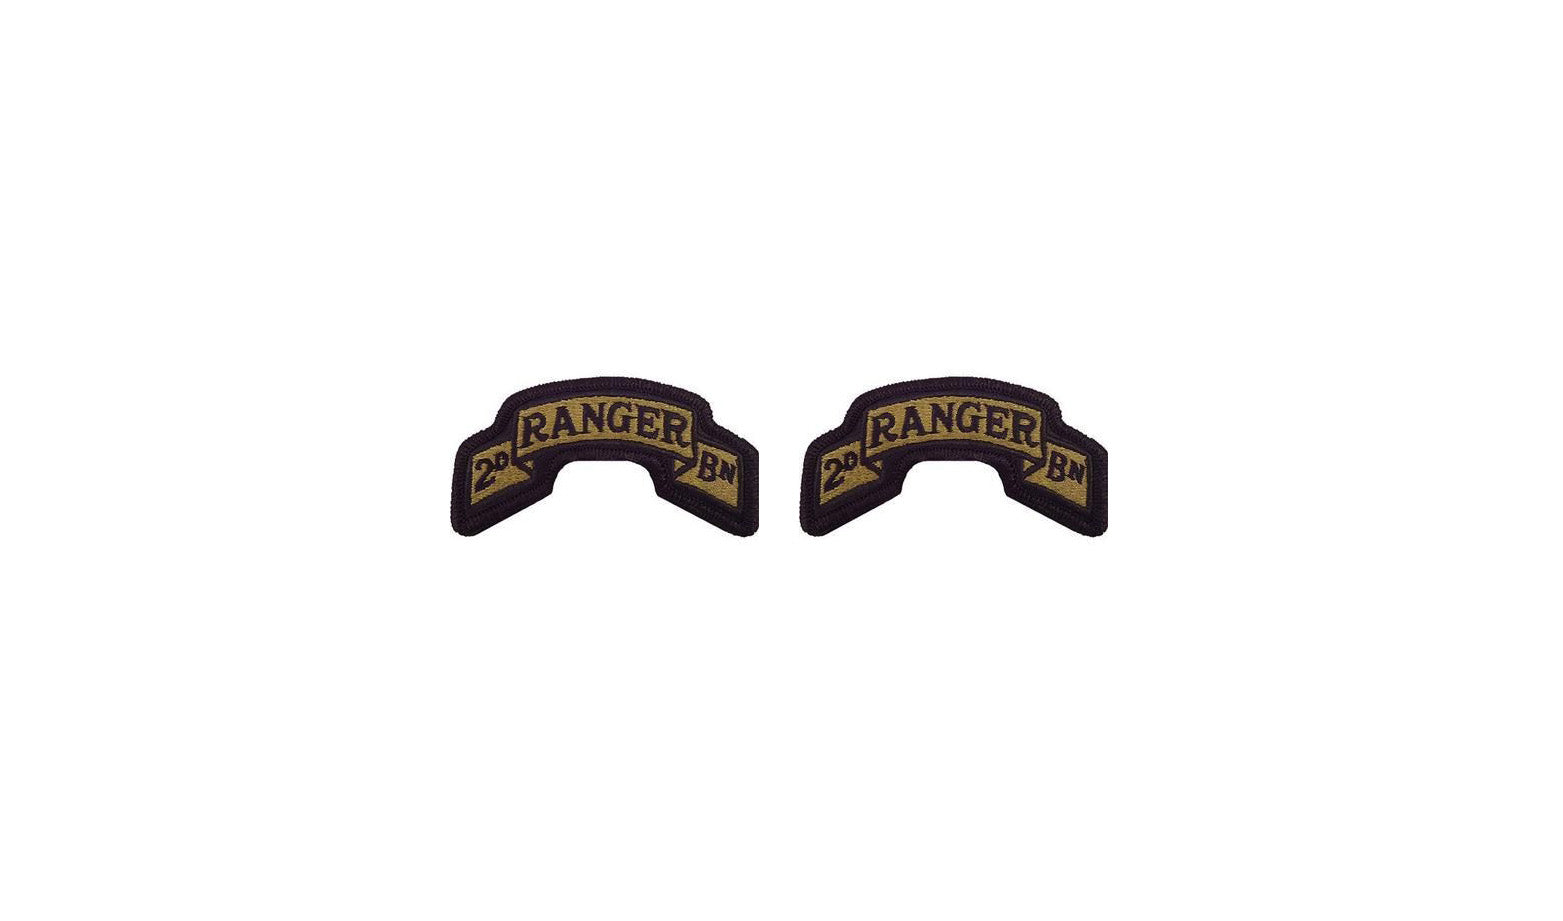 U.S. Army 75th Ranger Regiment 2nd Battalion OCP Scroll with Hook Fastener (pair).